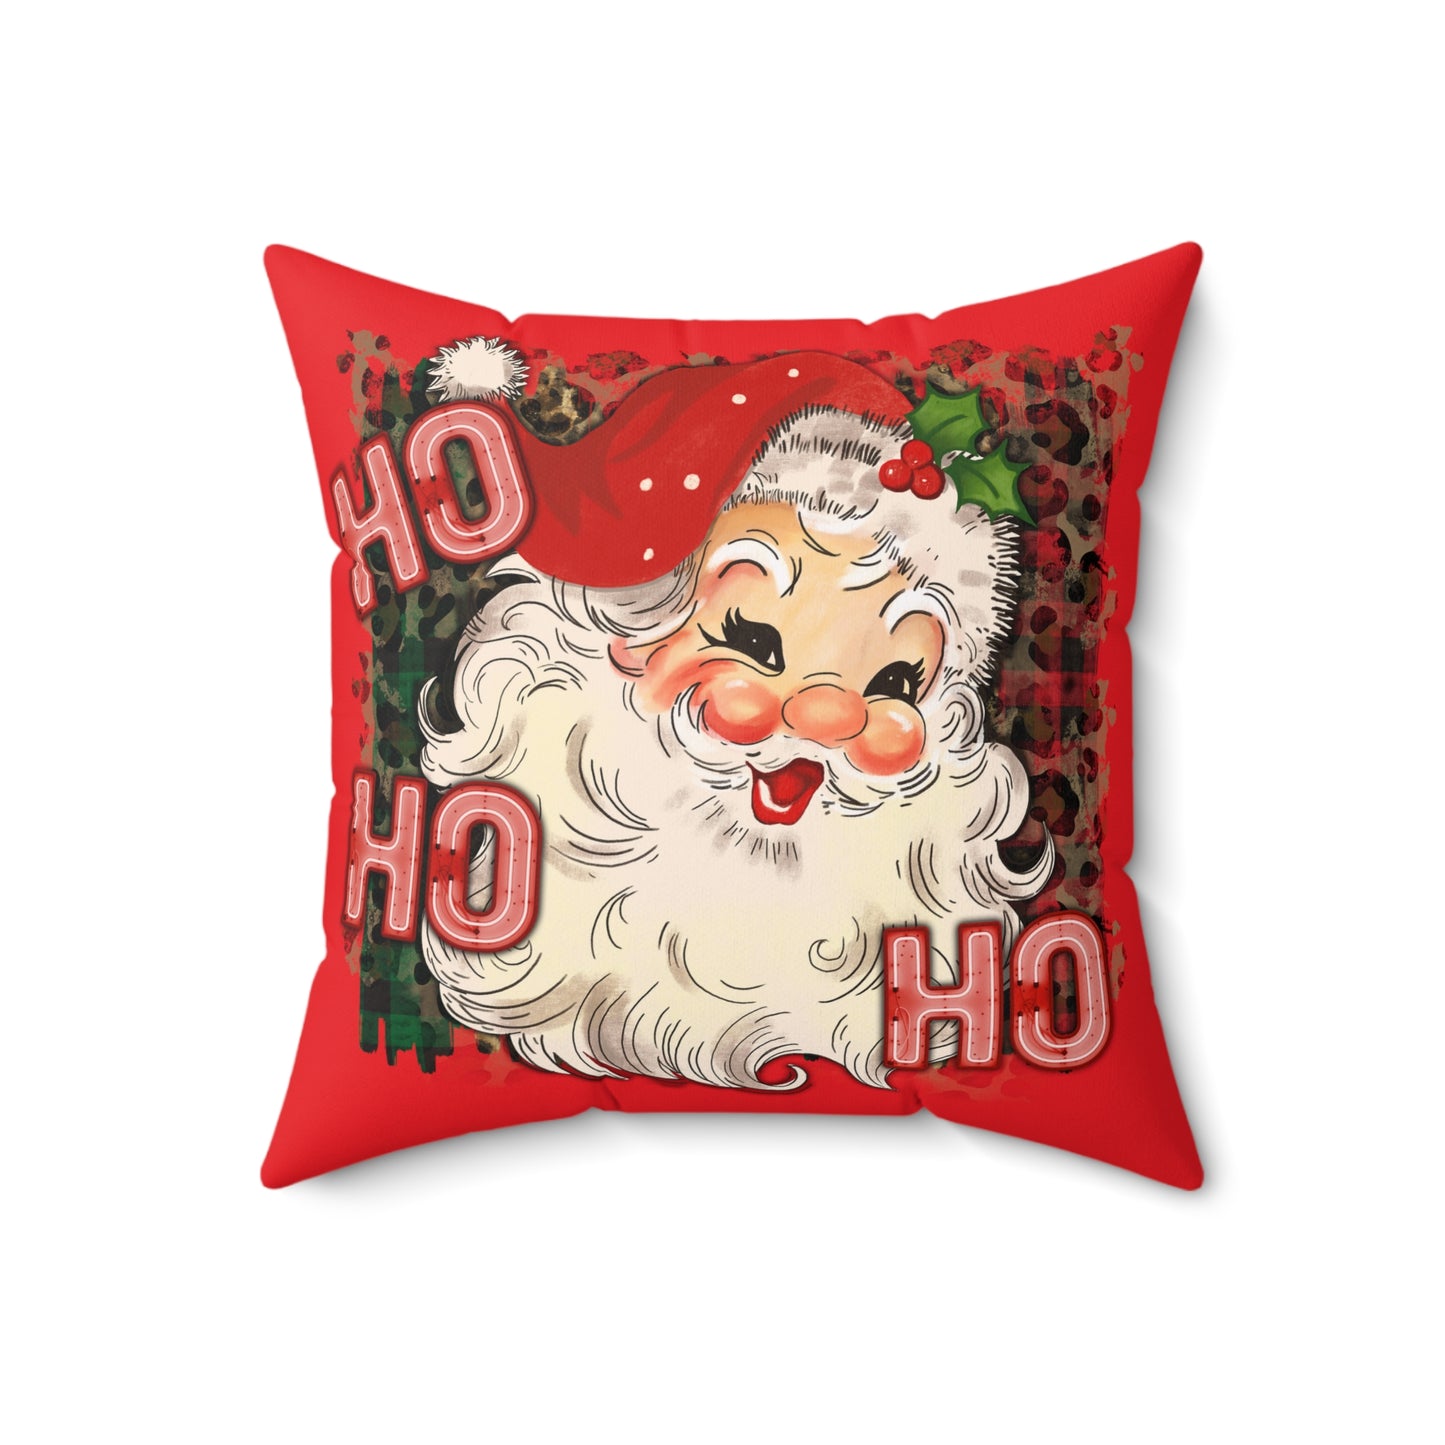 Retro Santa Pillow, Santa Pillow Cover, Cute Christmas Throw Pillow Cover, 18x18 Holiday Square Pillow